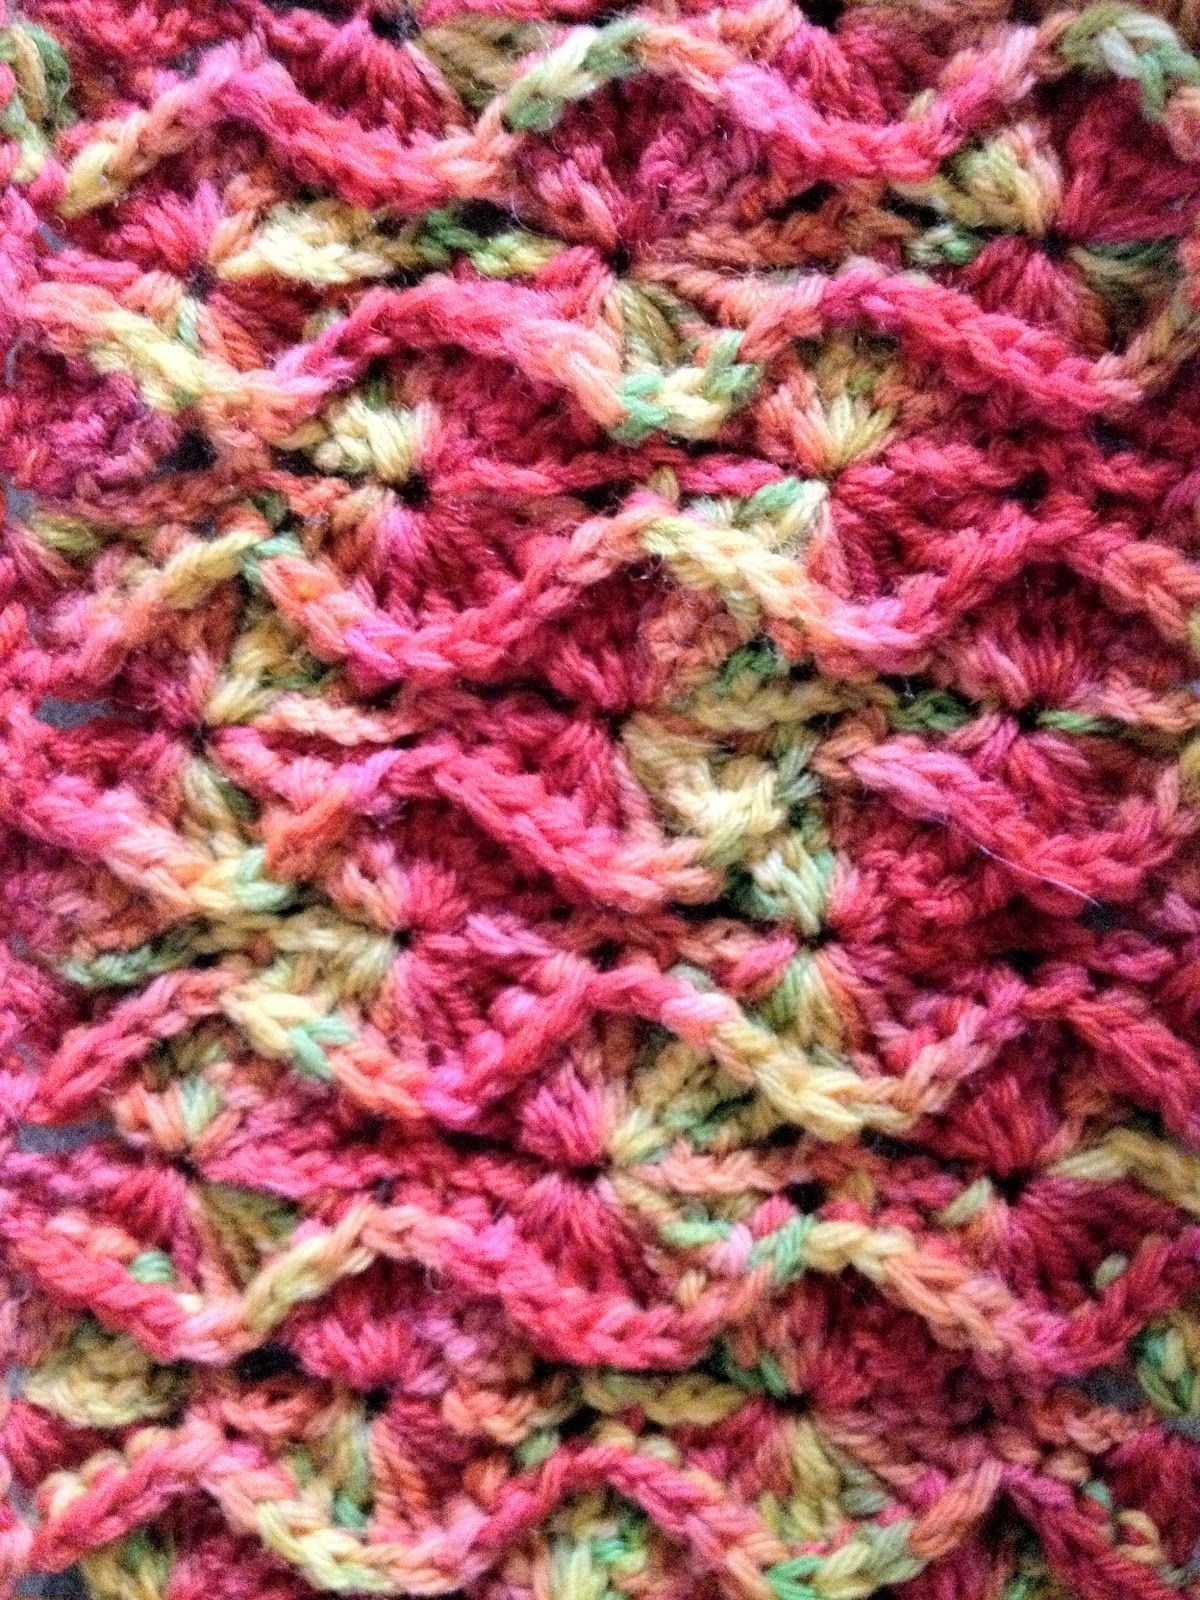 Crochet Bavarian Stitch in Rows – Tutorial